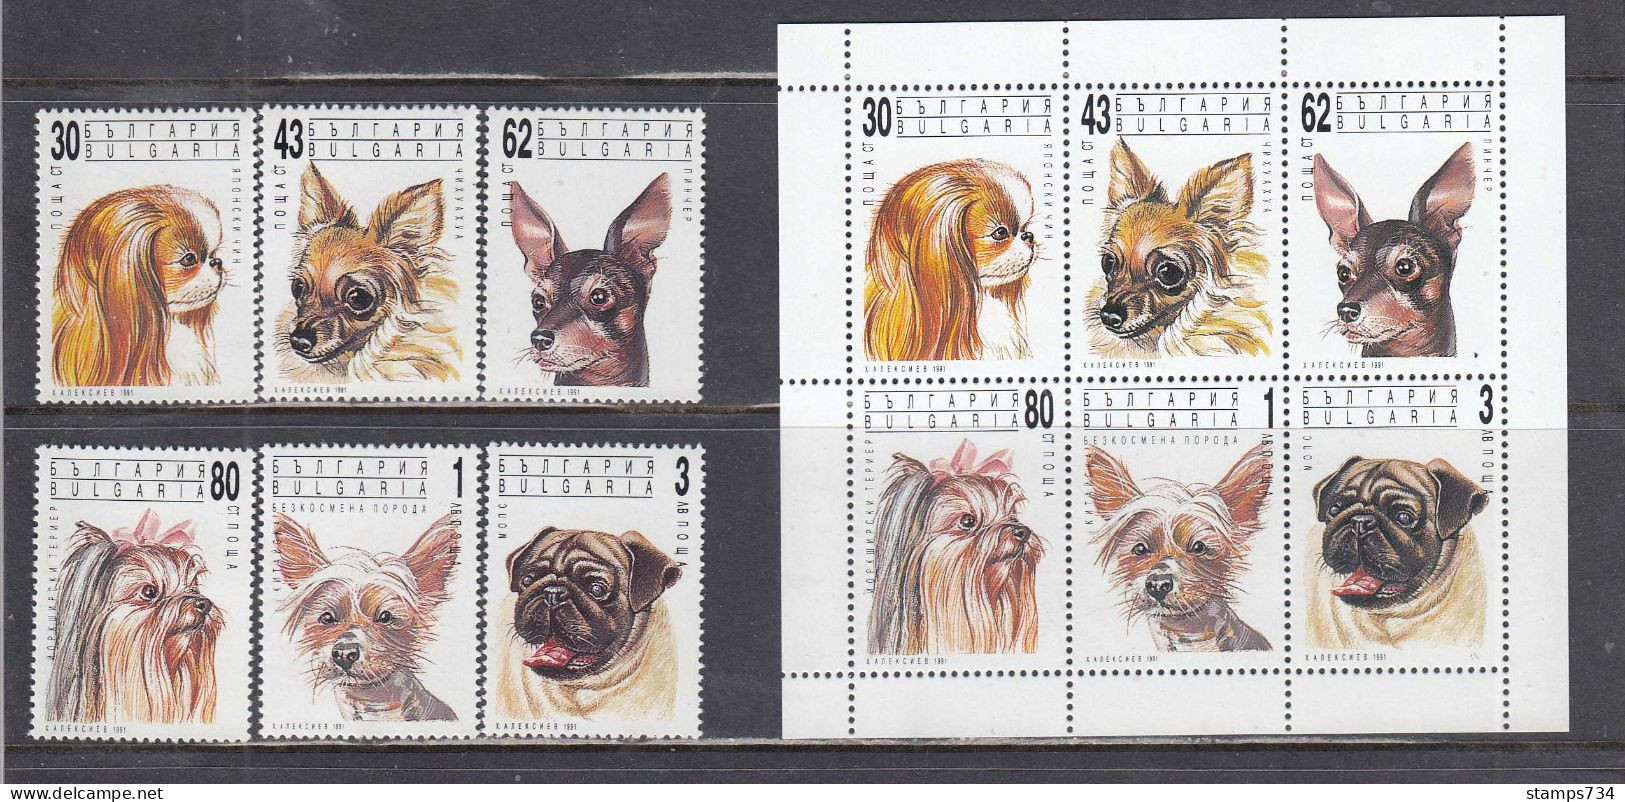 Bulgaria 1991 - Dogs, Mi-Nr. 3929/34 Set+sheet, MNH** - Ungebraucht